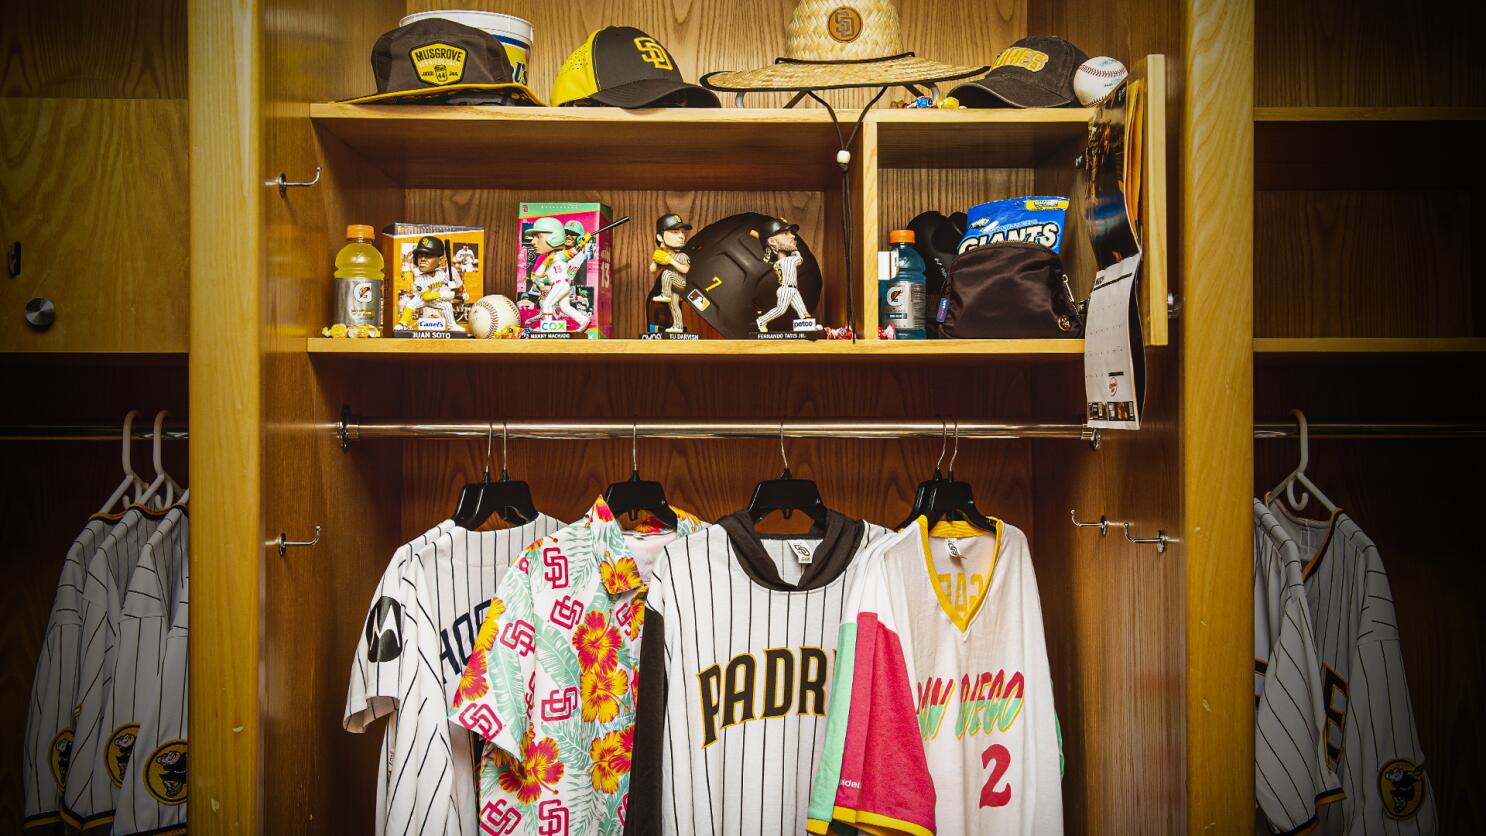 New Ha-Seong Kim jerseys available at the @Padres Team Store